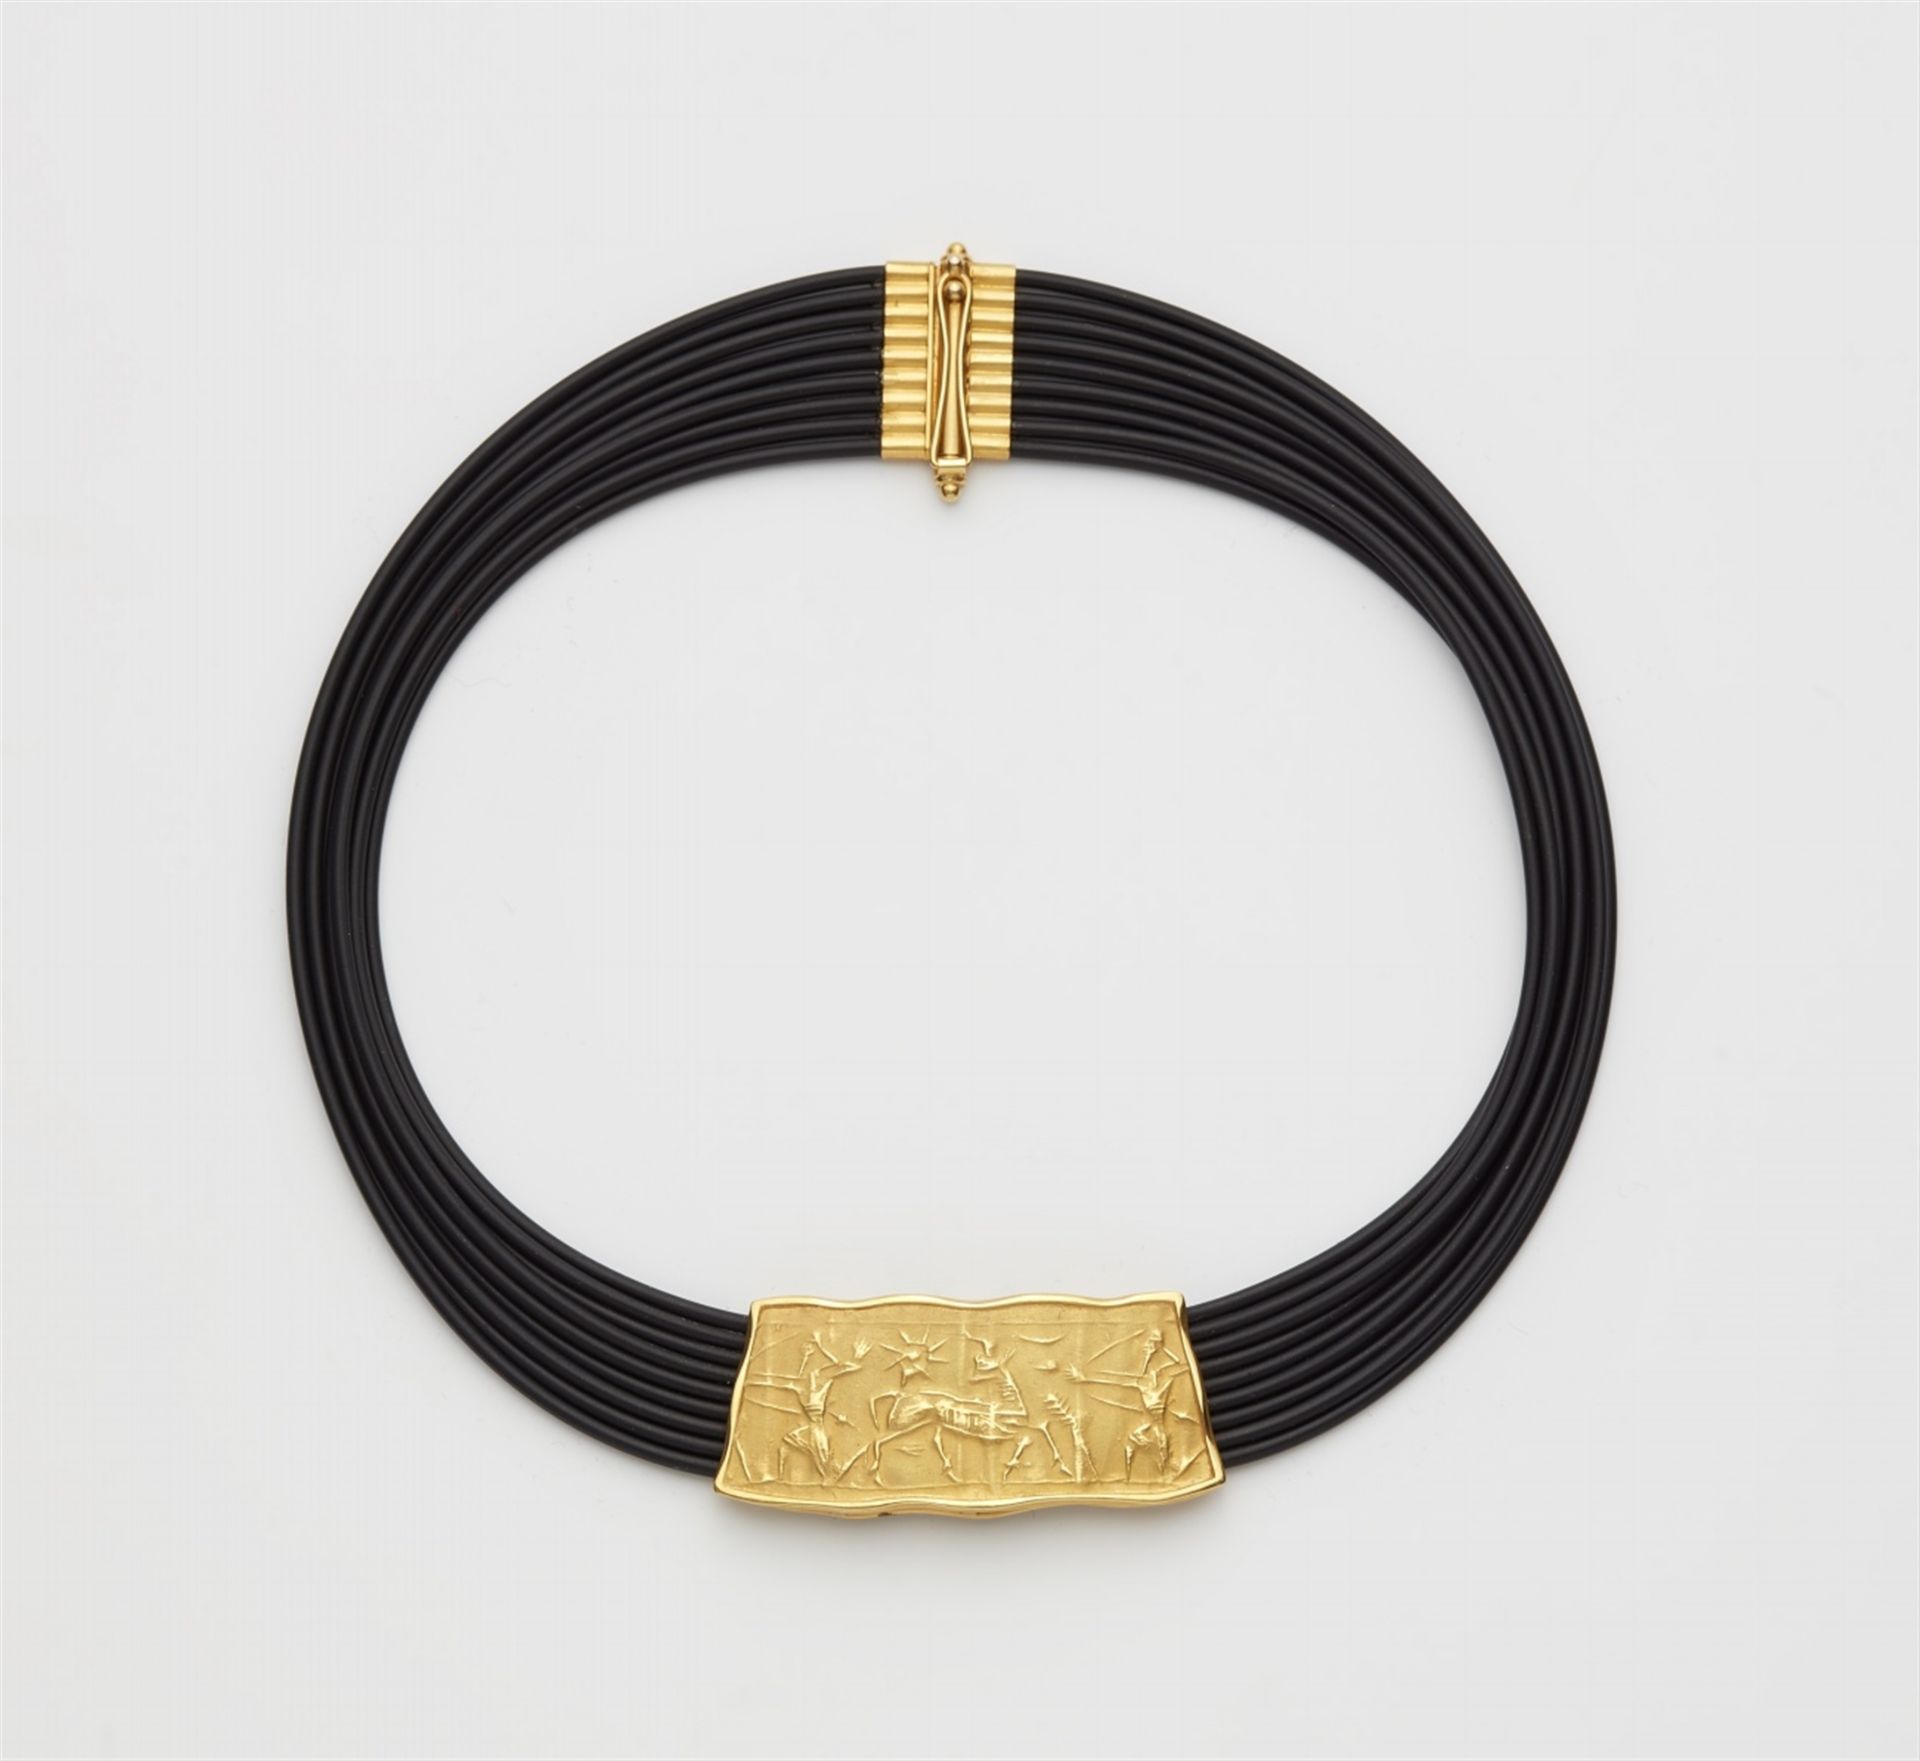 An 18k gold necklace with an Assyrian seal imprint